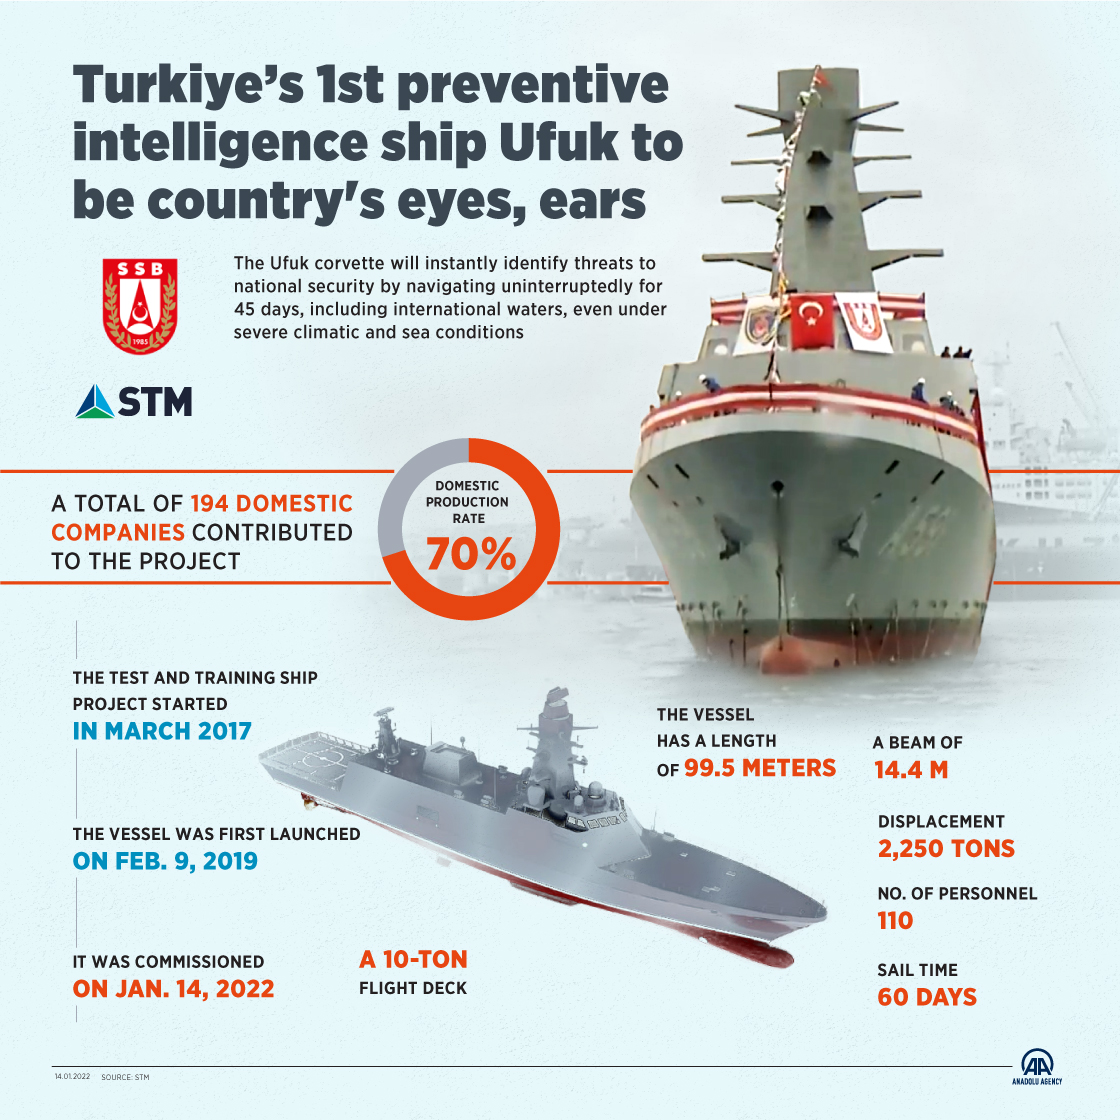 Turkiye’s 1st preventive intelligence ship Ufuk to be country's eyes, ears